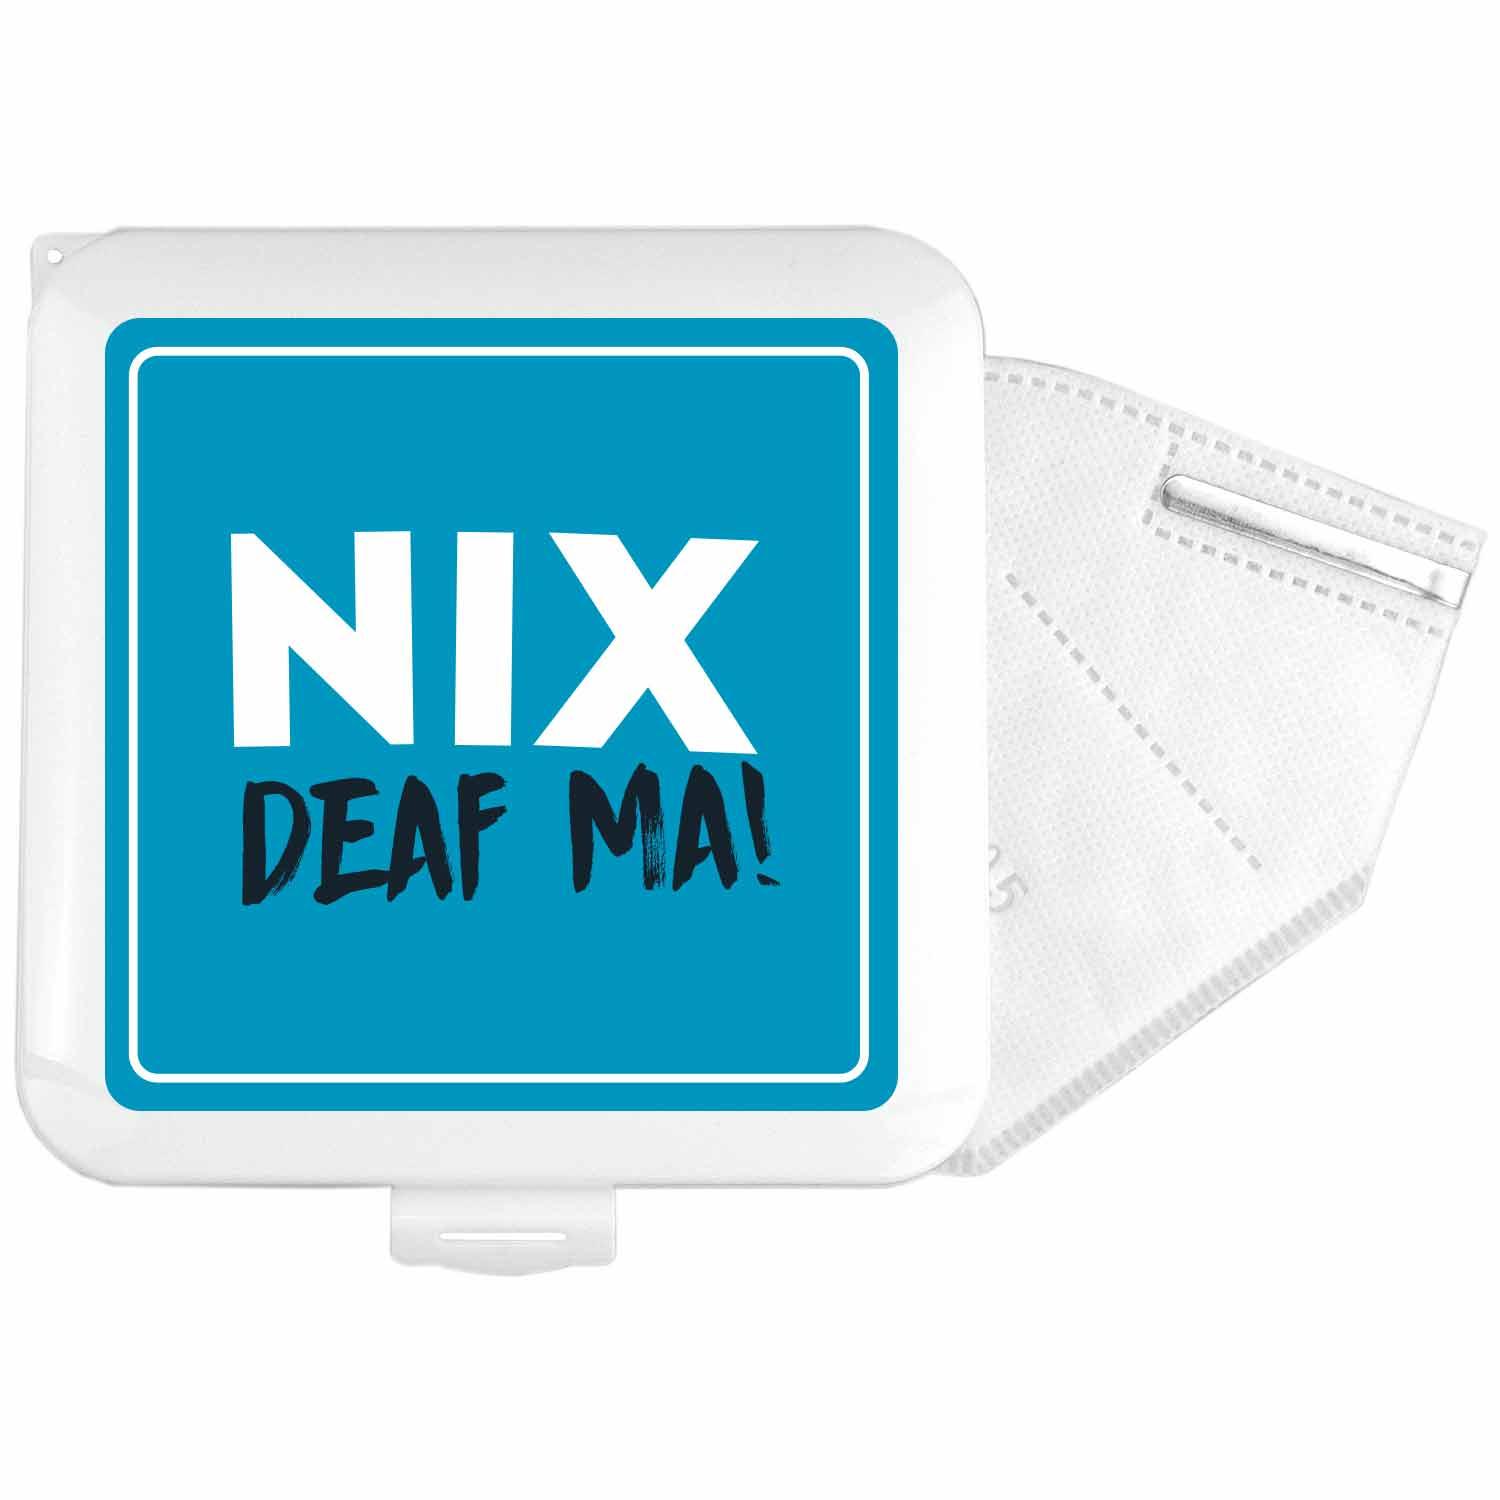 Maskenbox "Nix deaf ma" - bavariashop - mei LebensGfui